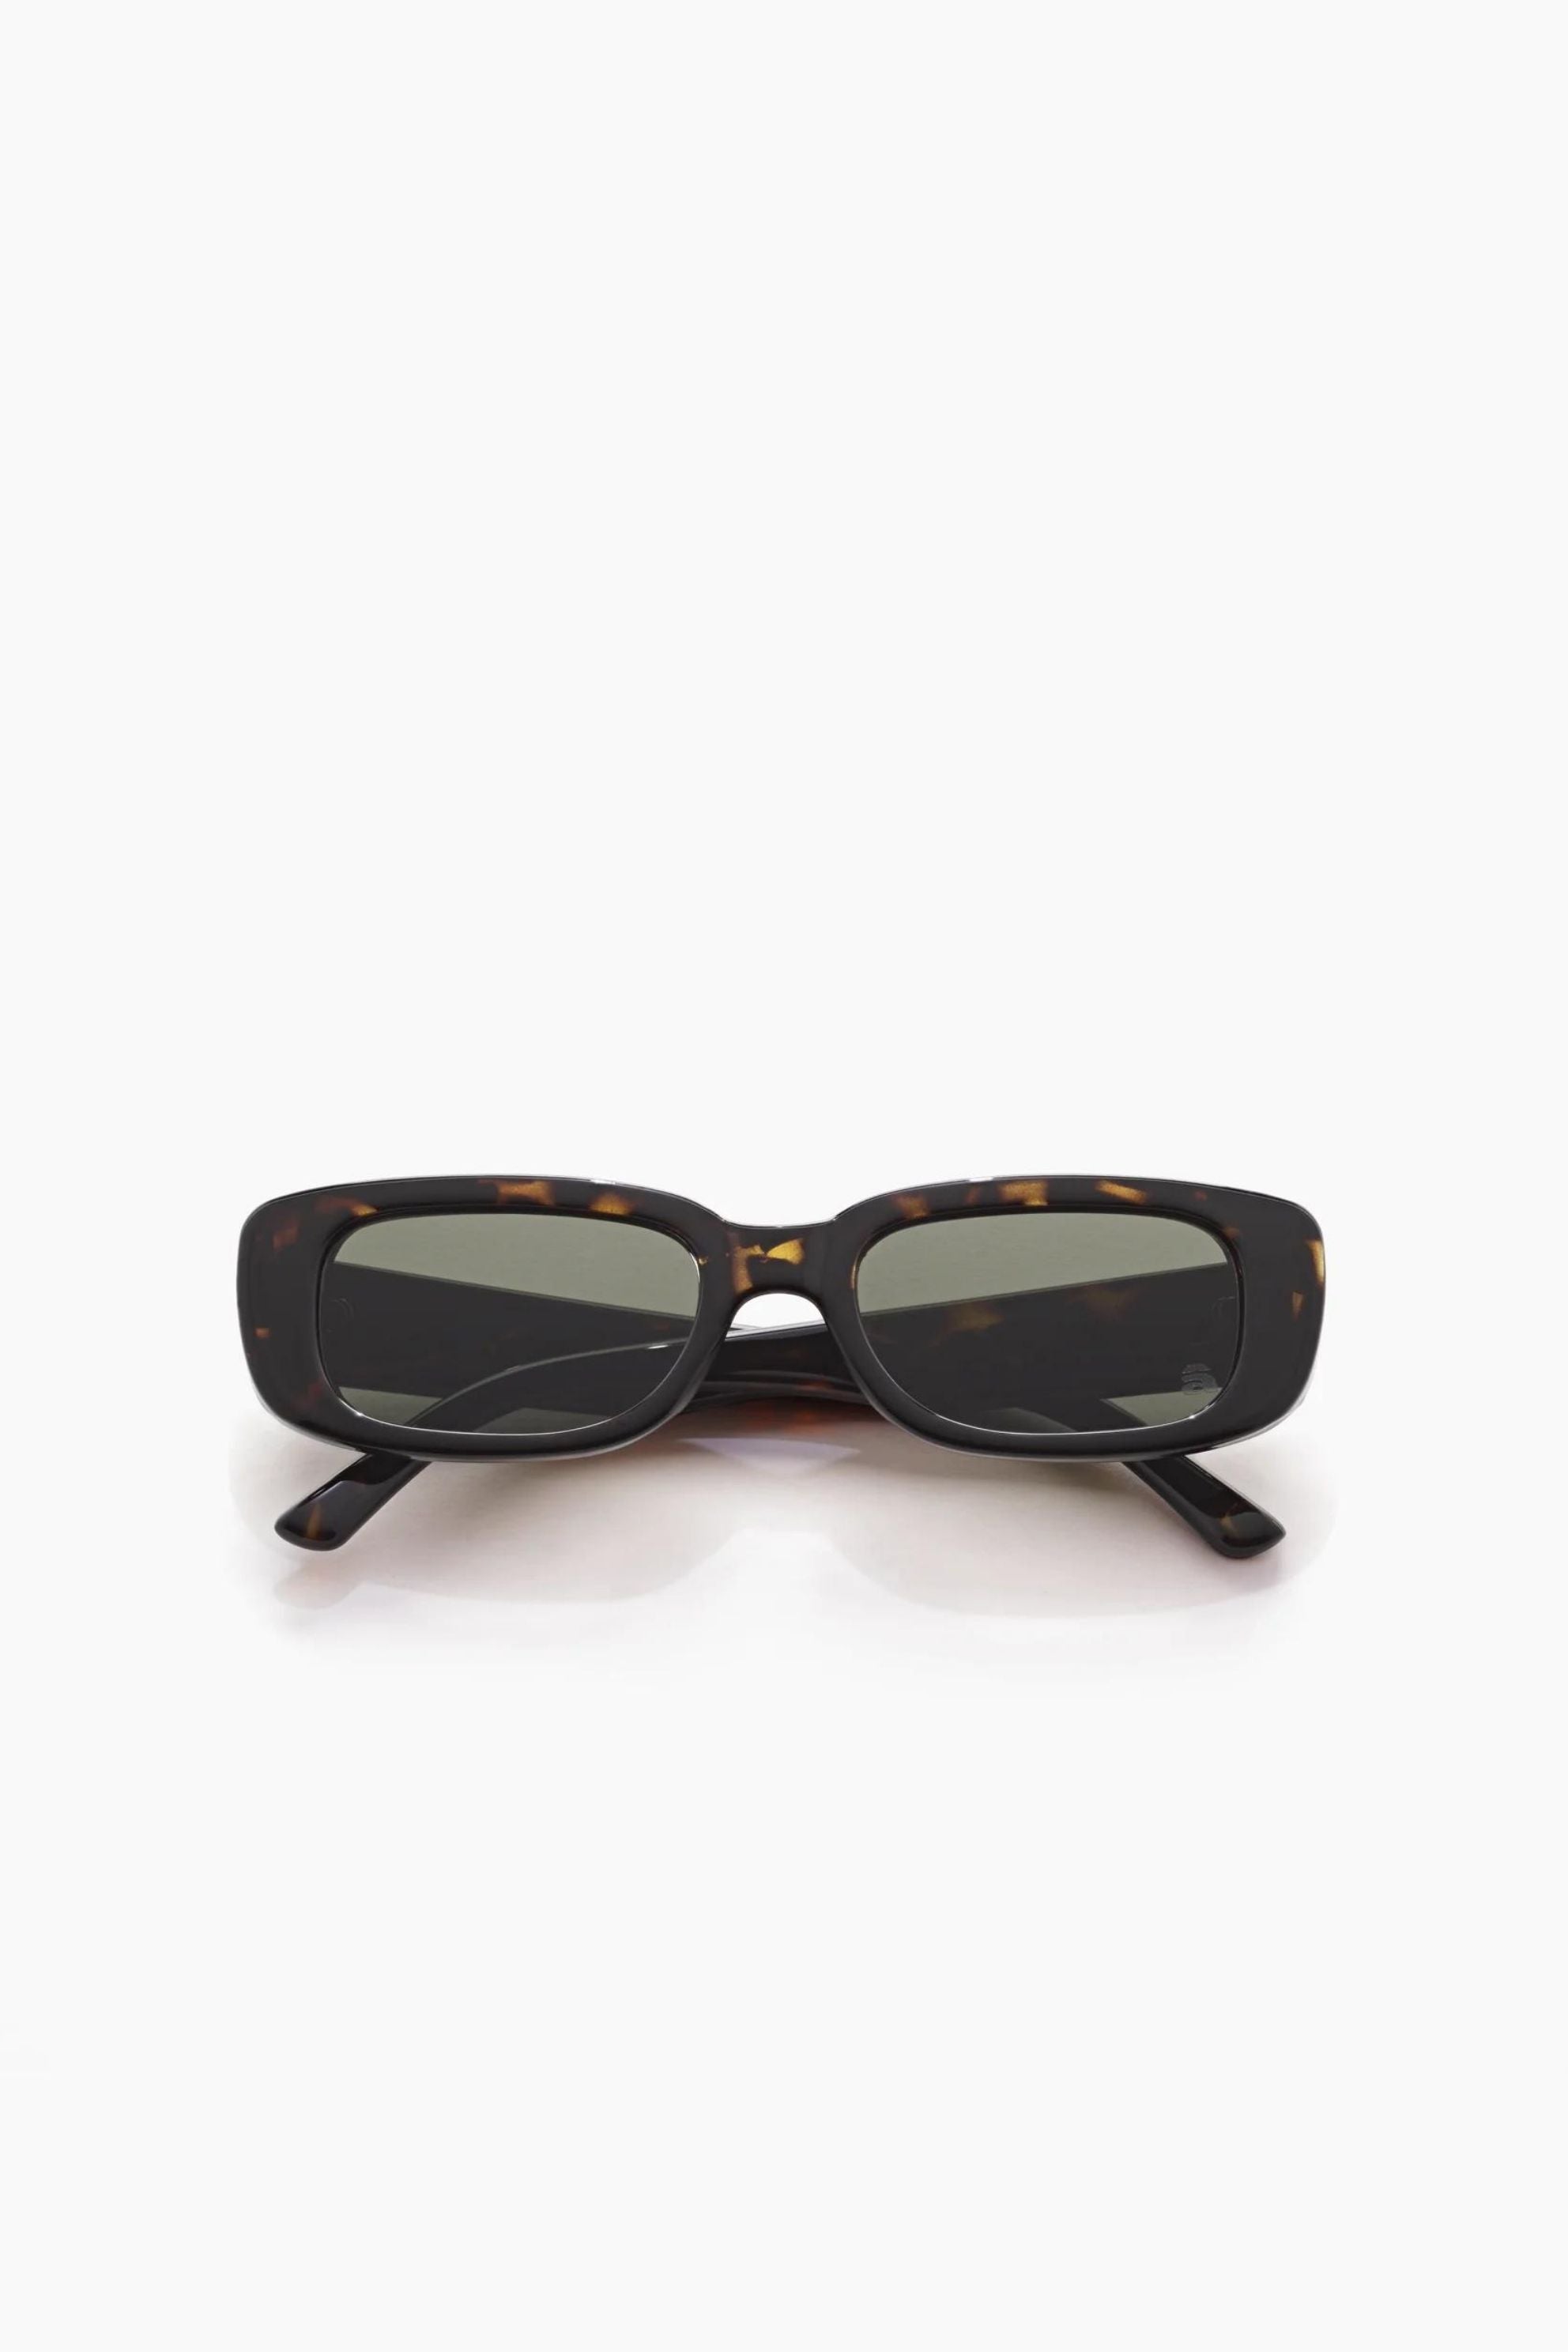 Dollin Sunglasses Wasp / Moss